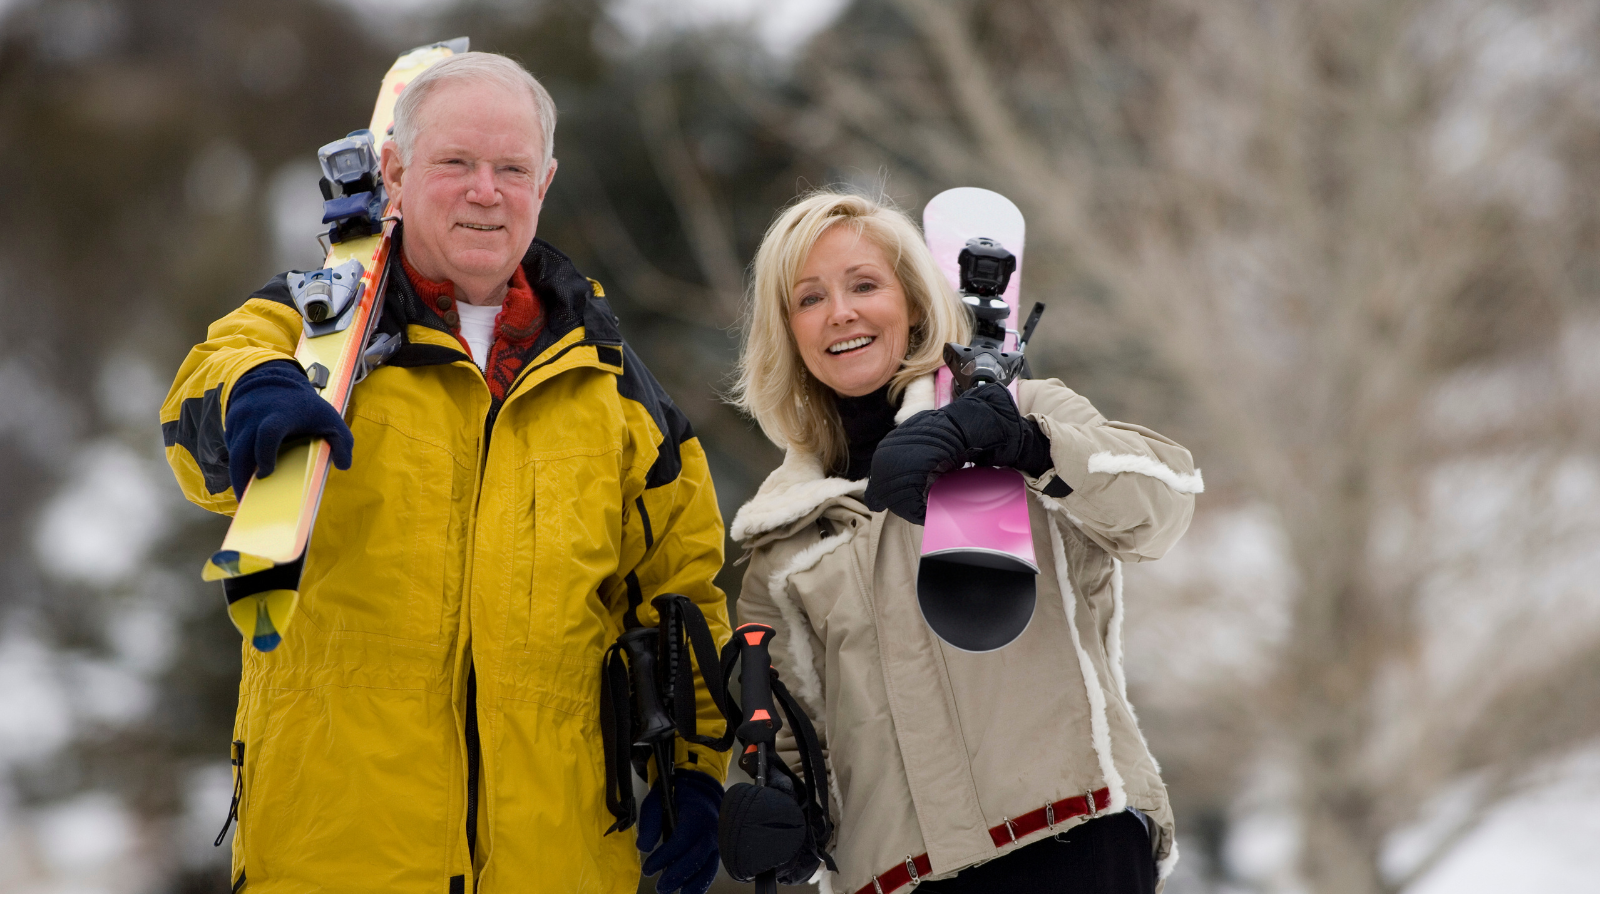 Shop Talk- Swedish Scientists Say Skiing Delays Symptom of Parkinson’s Disease